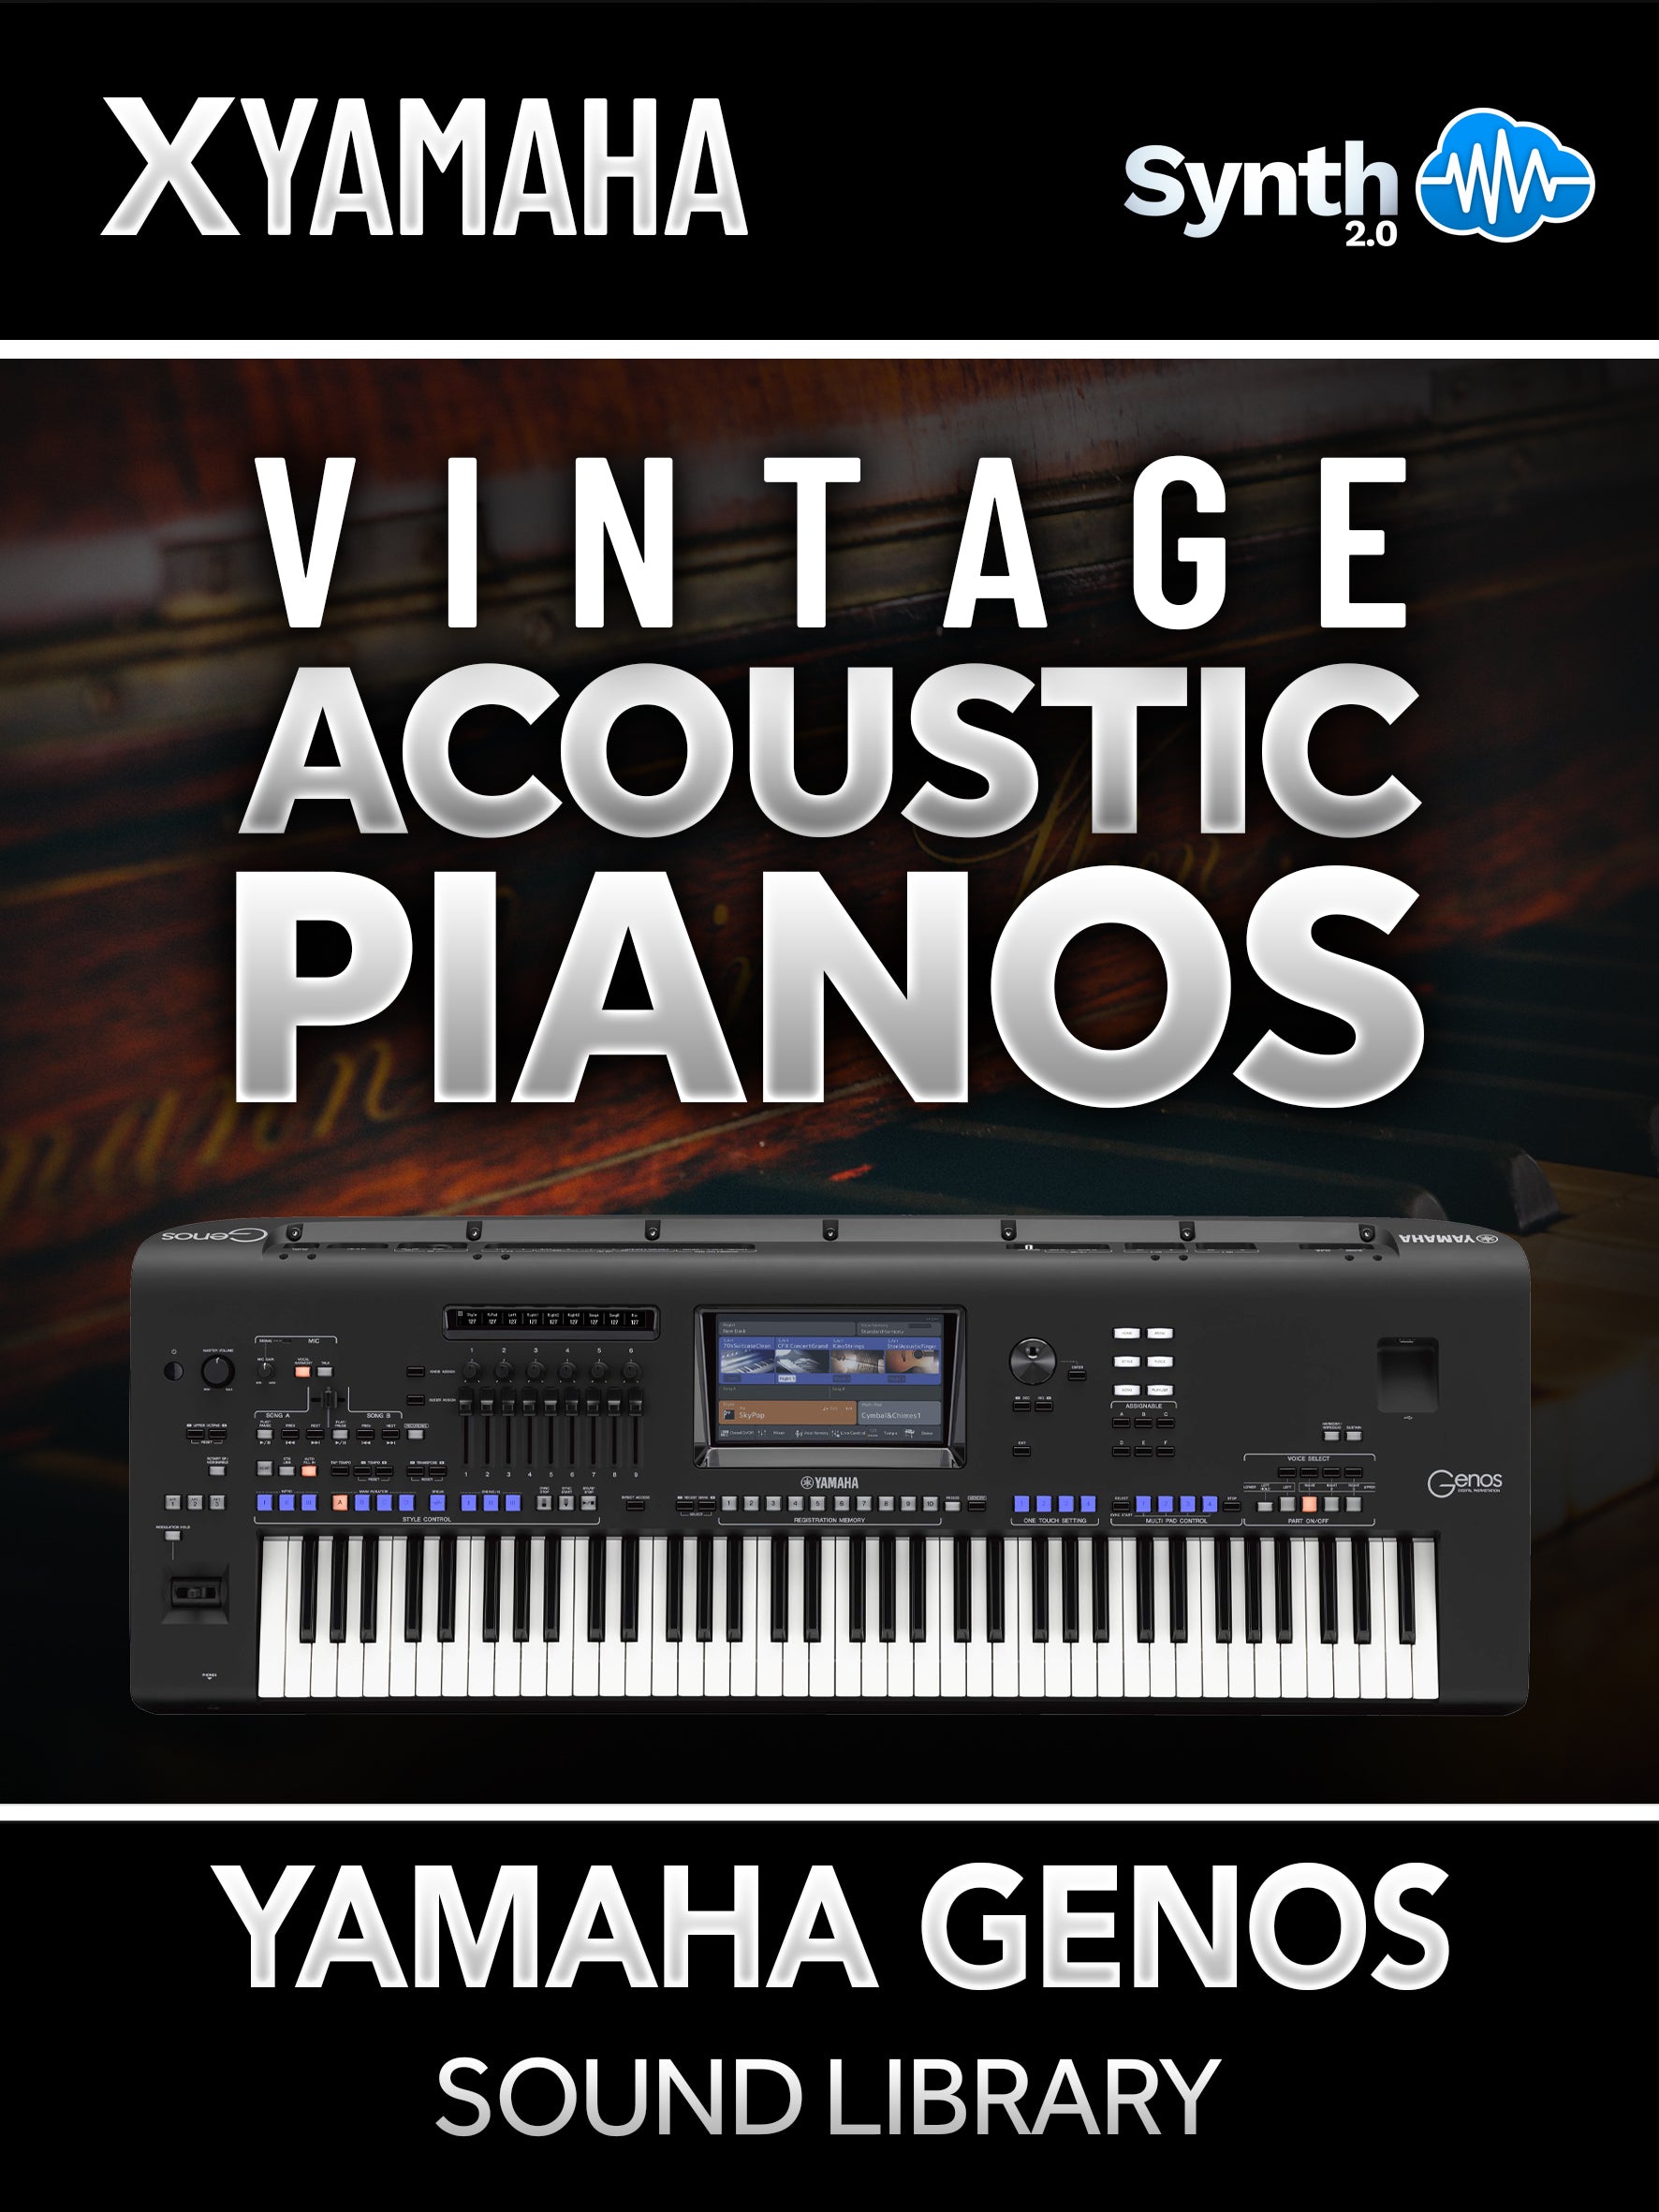 GNL000 - Vintage Acoustic Pianos - Yamaha GENOS / 2 ( 23 presets )